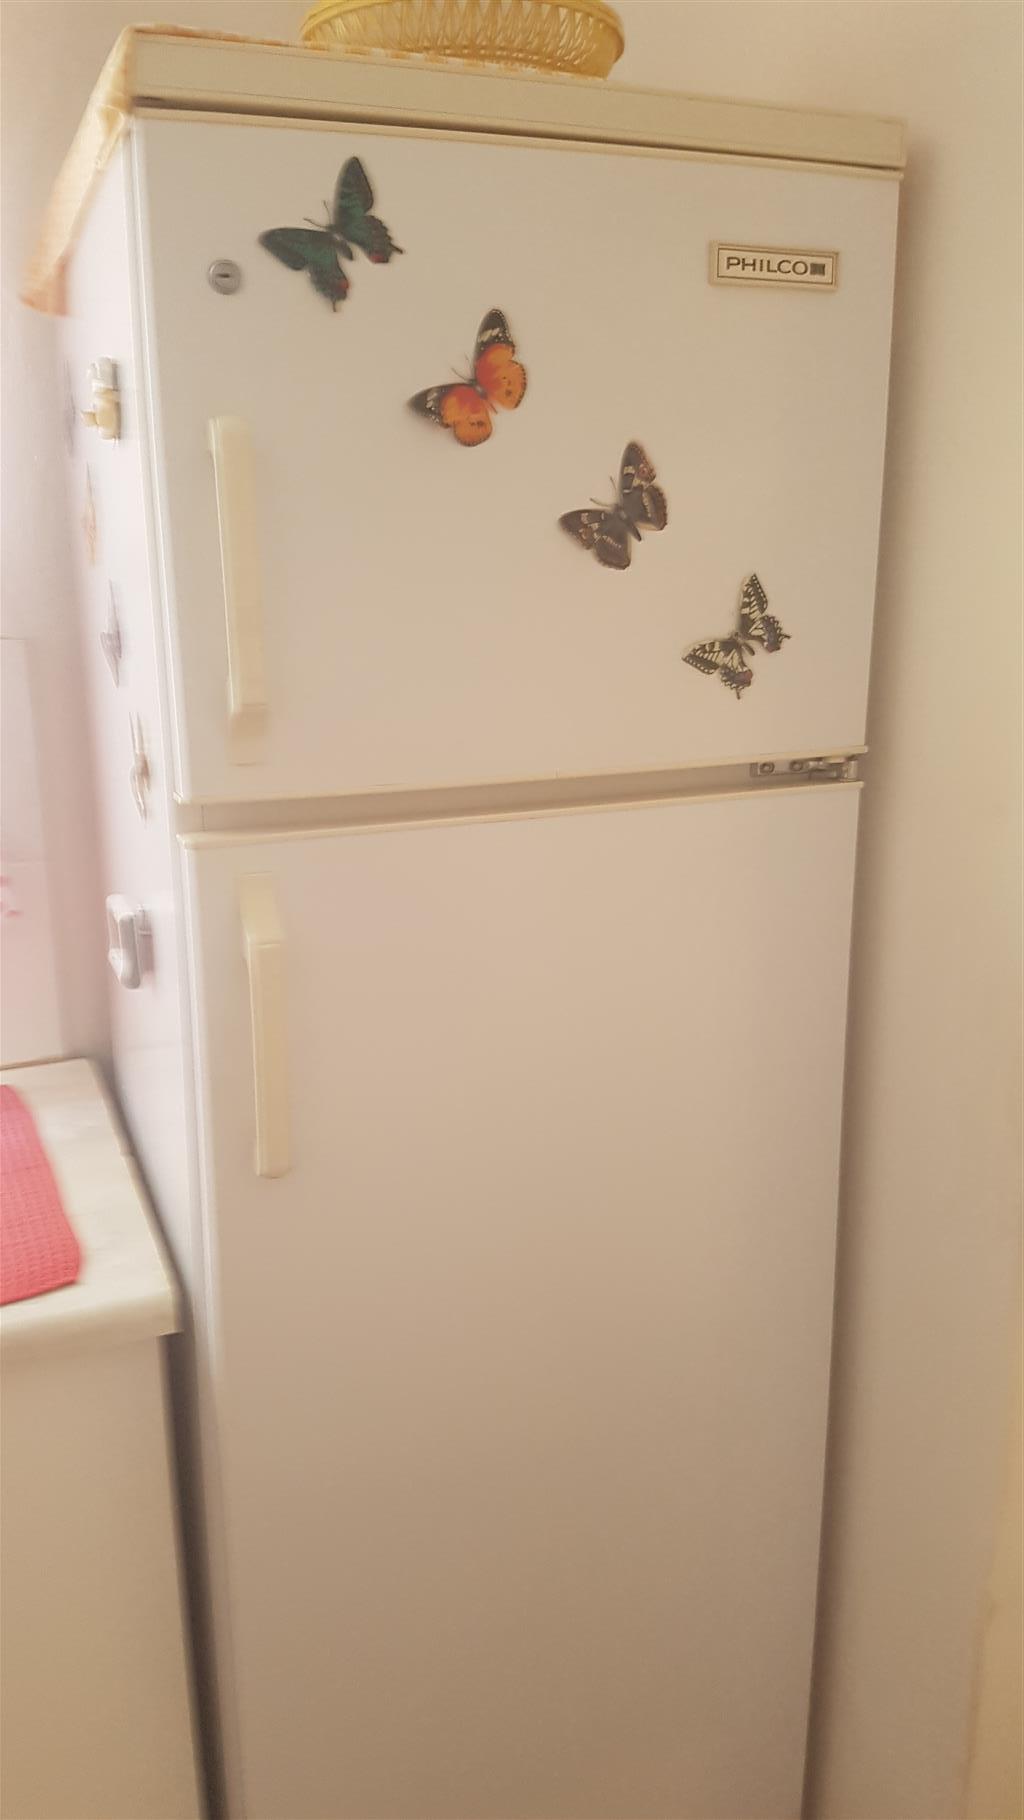 Philco fridge for sale